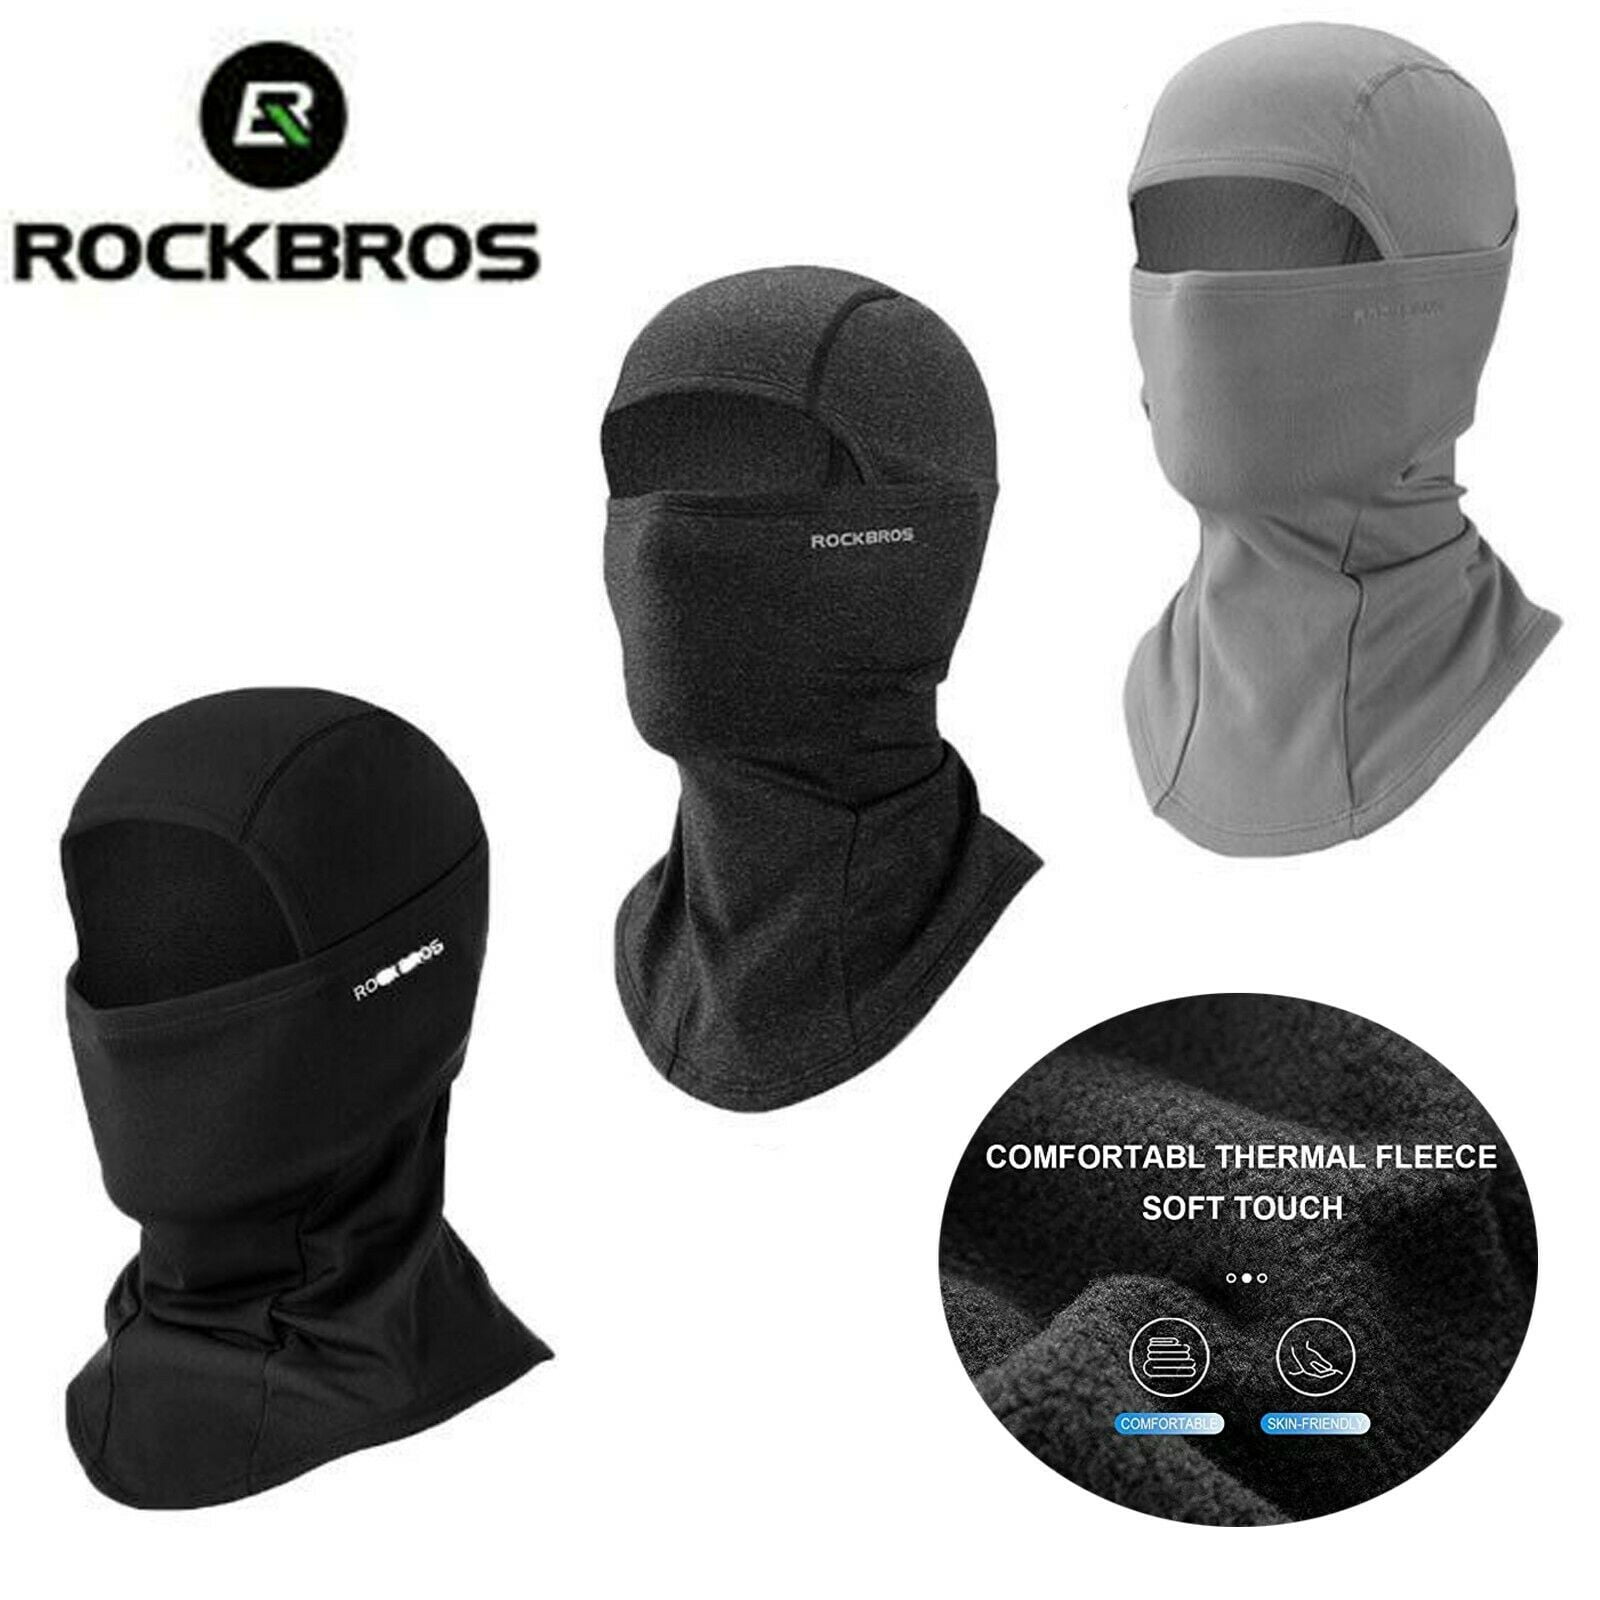 ROCKBROS Men's Balaclava Windproof Ski Mask for Cold Weather Balaclava Mask Winter Thermal Fleece Hood 